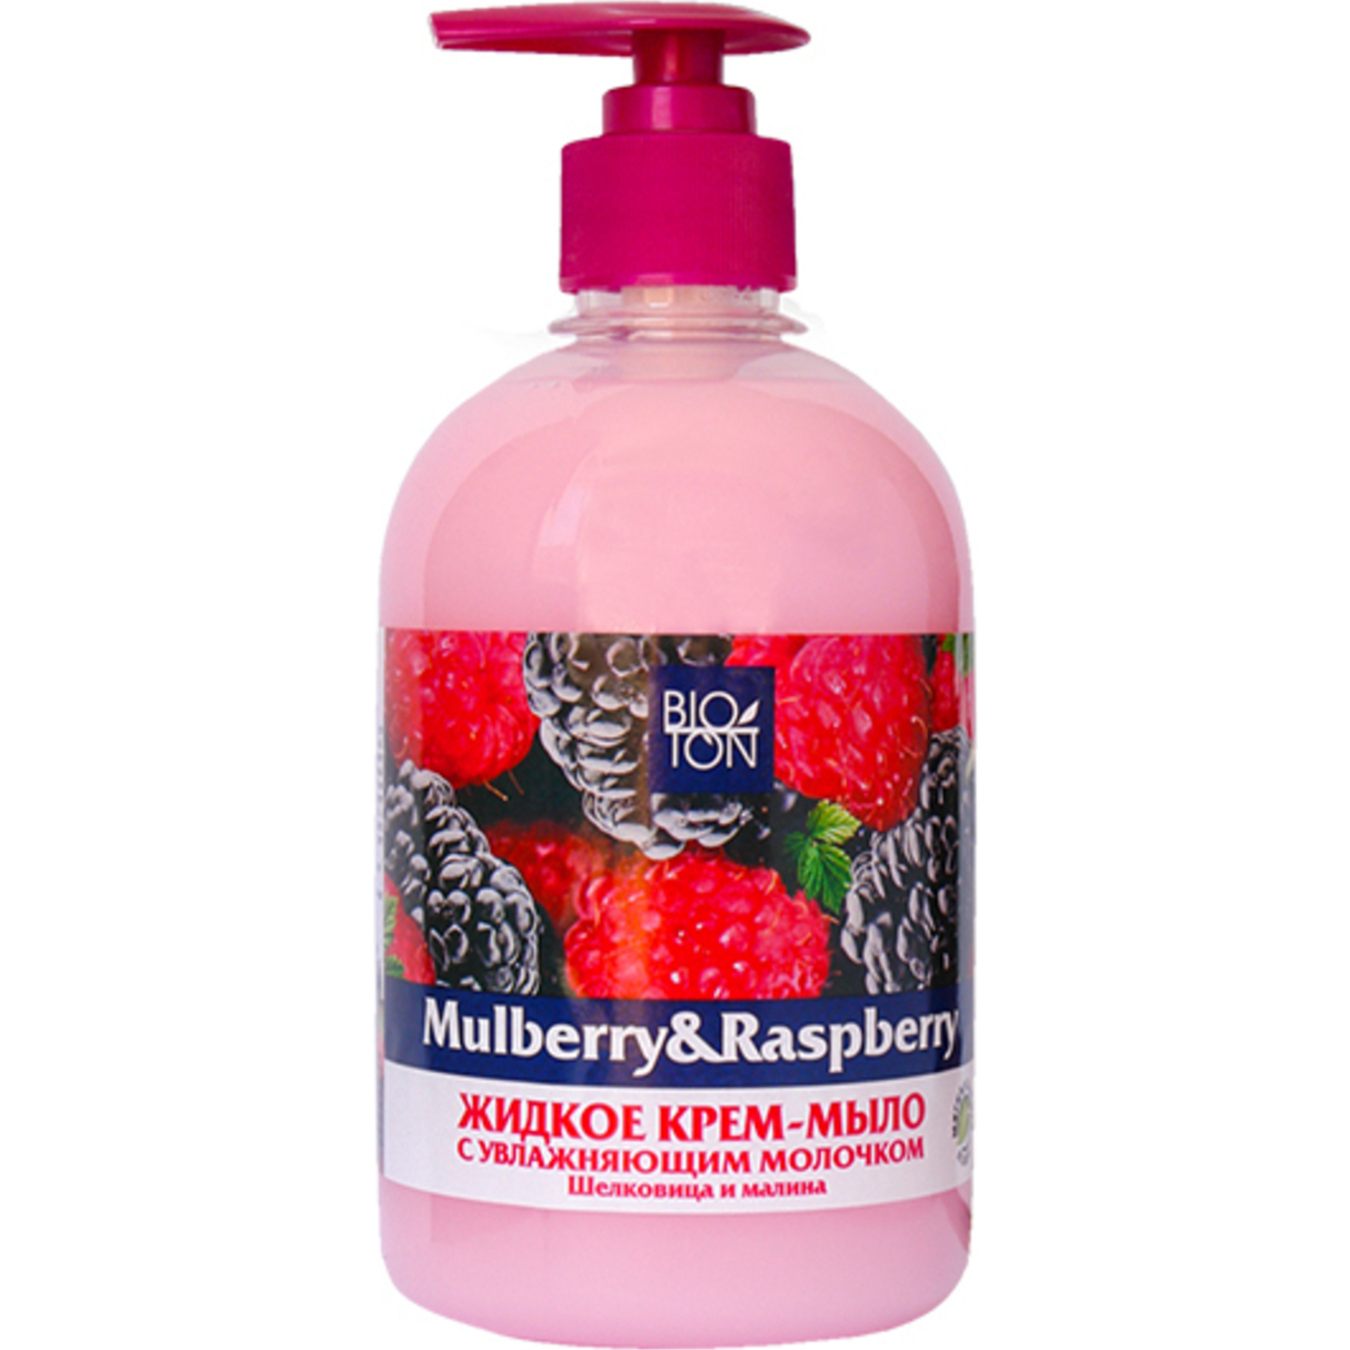 Bioton Mulberry & Raspberry Liquid Cream Soap with Moisturizing Milk 500ml